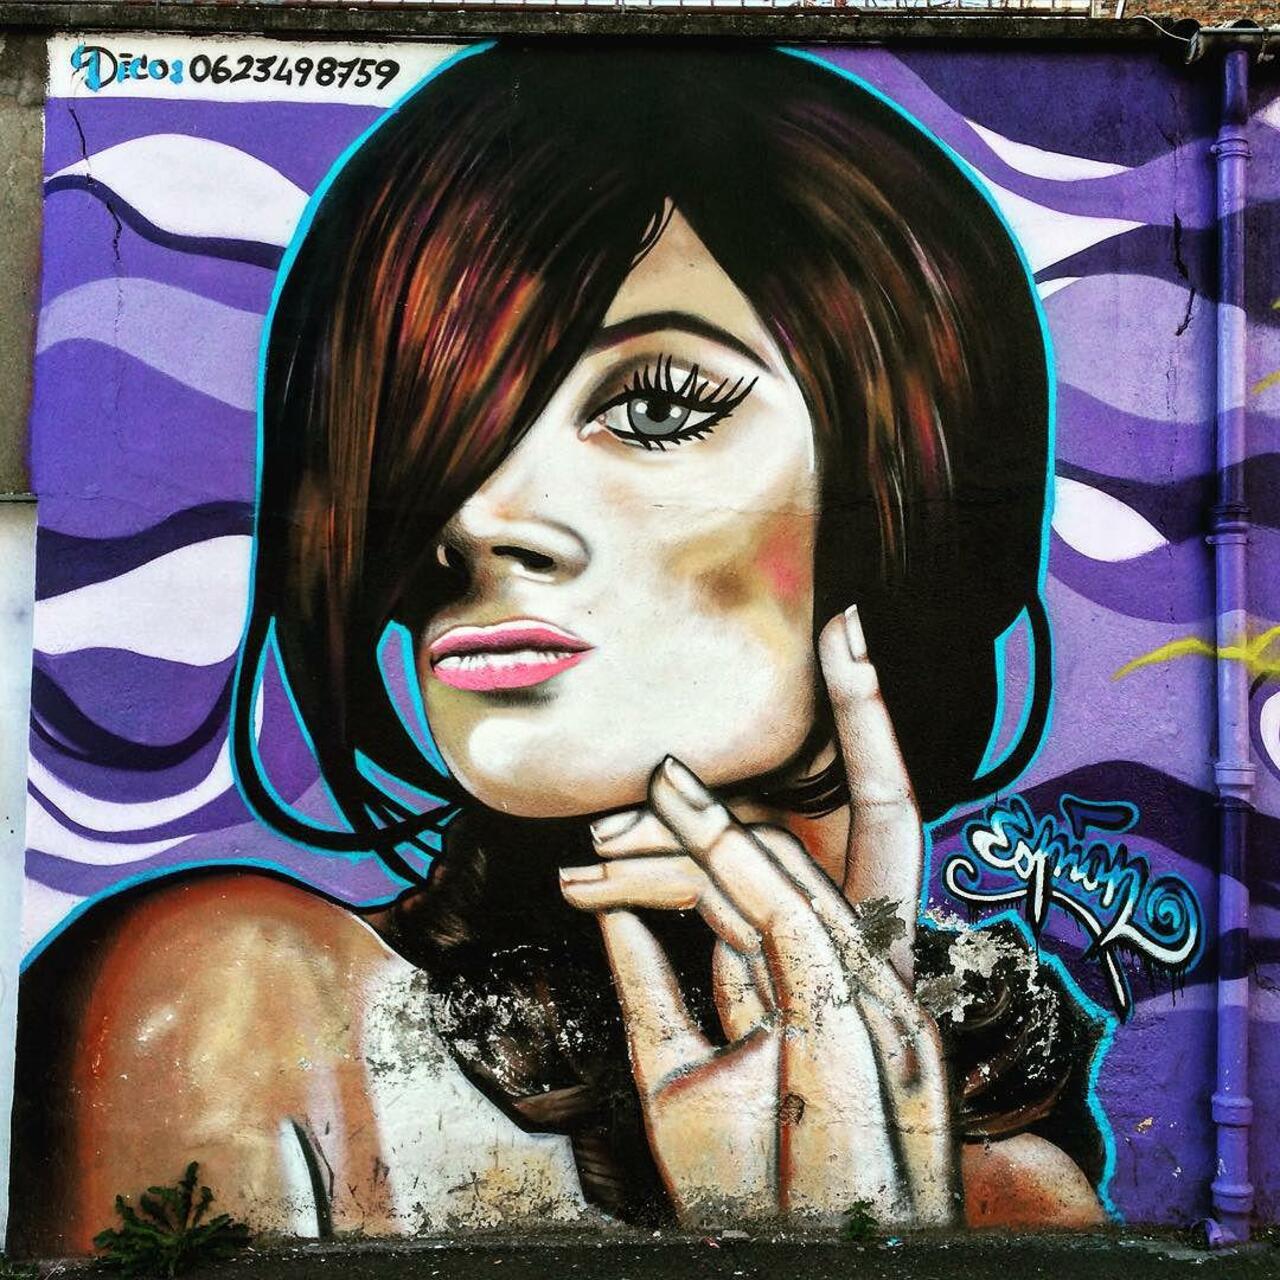 #Paris #graffiti photo by @elricoelmagnifico http://ift.tt/1jvYmnA #StreetArt http://t.co/2EasTTOiOE